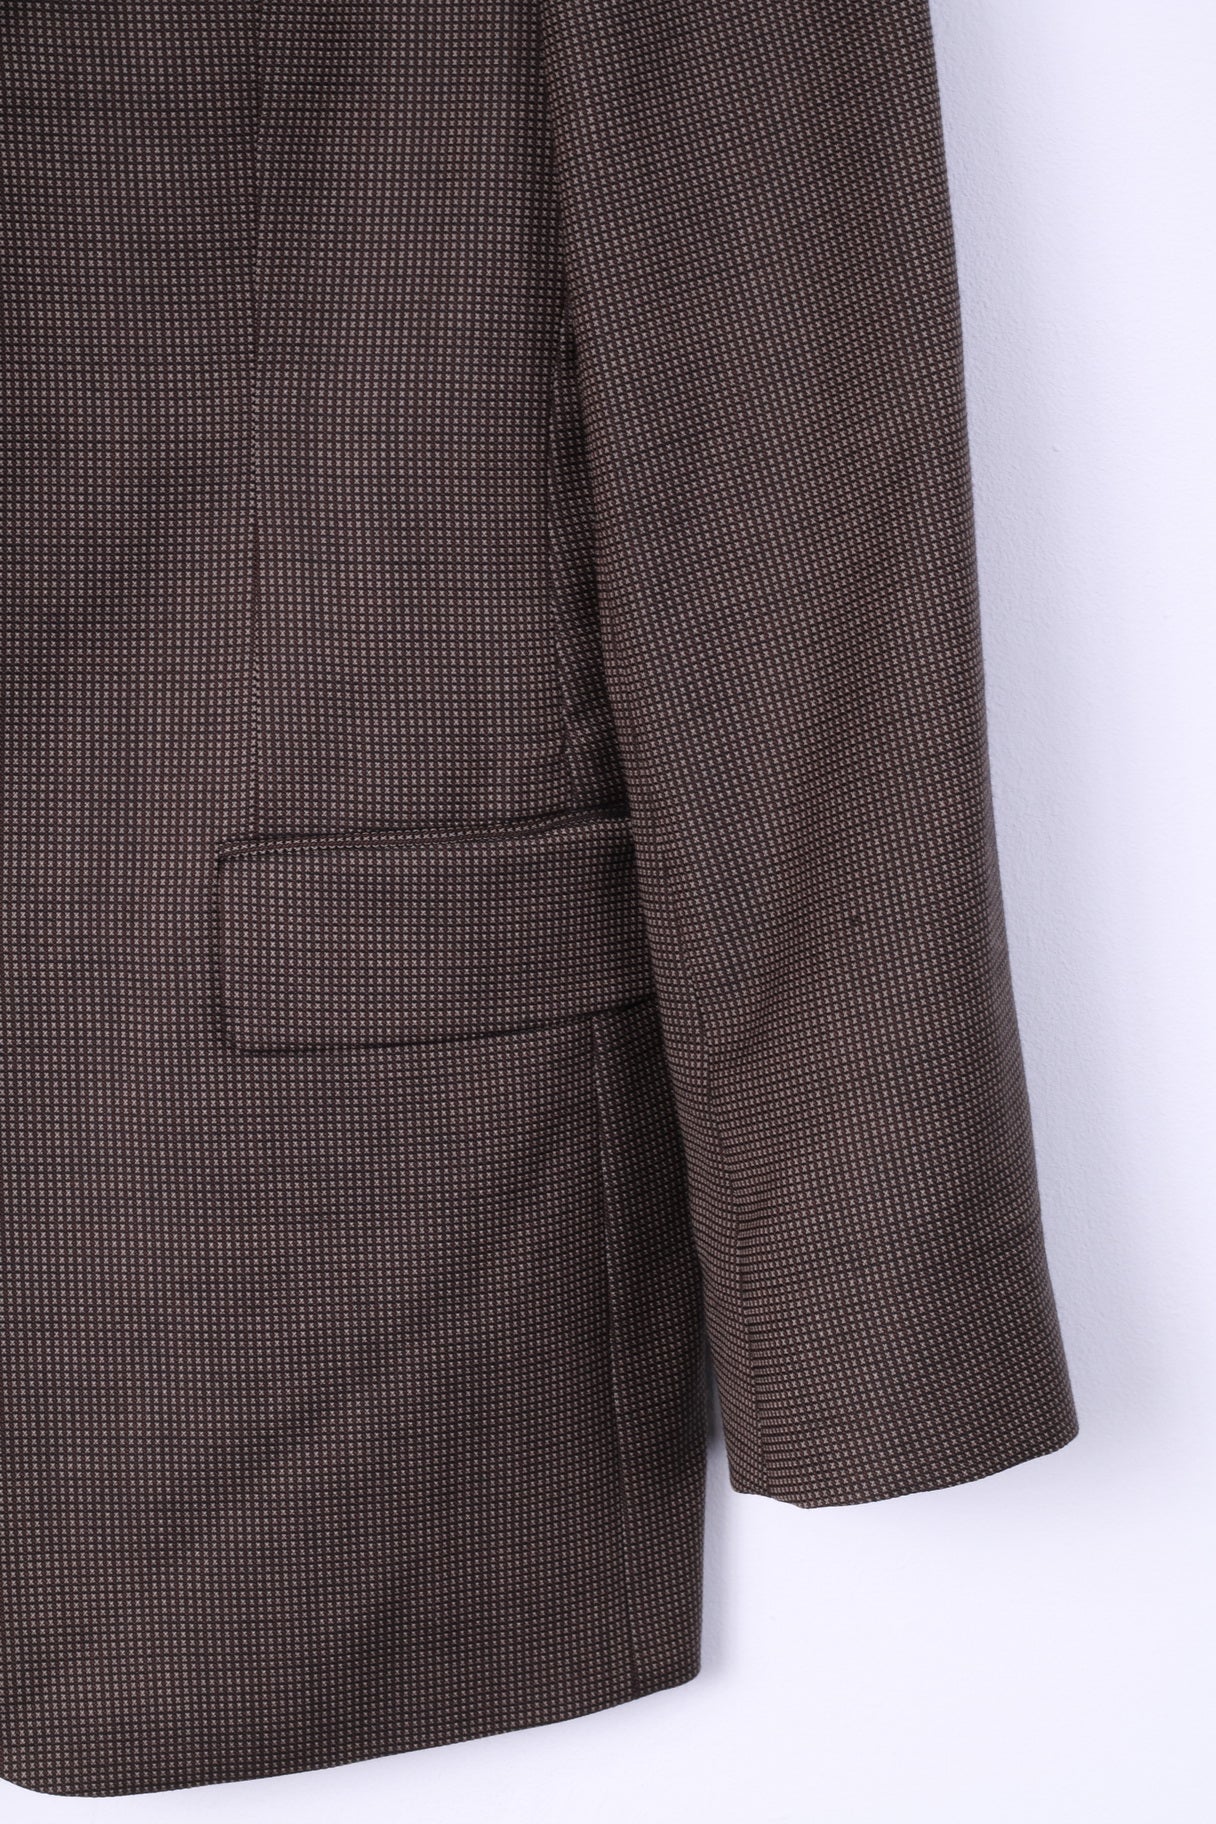 Hugo Boss Men 50 40 Blazer Brown Pure Wool Single Breasted Jacket